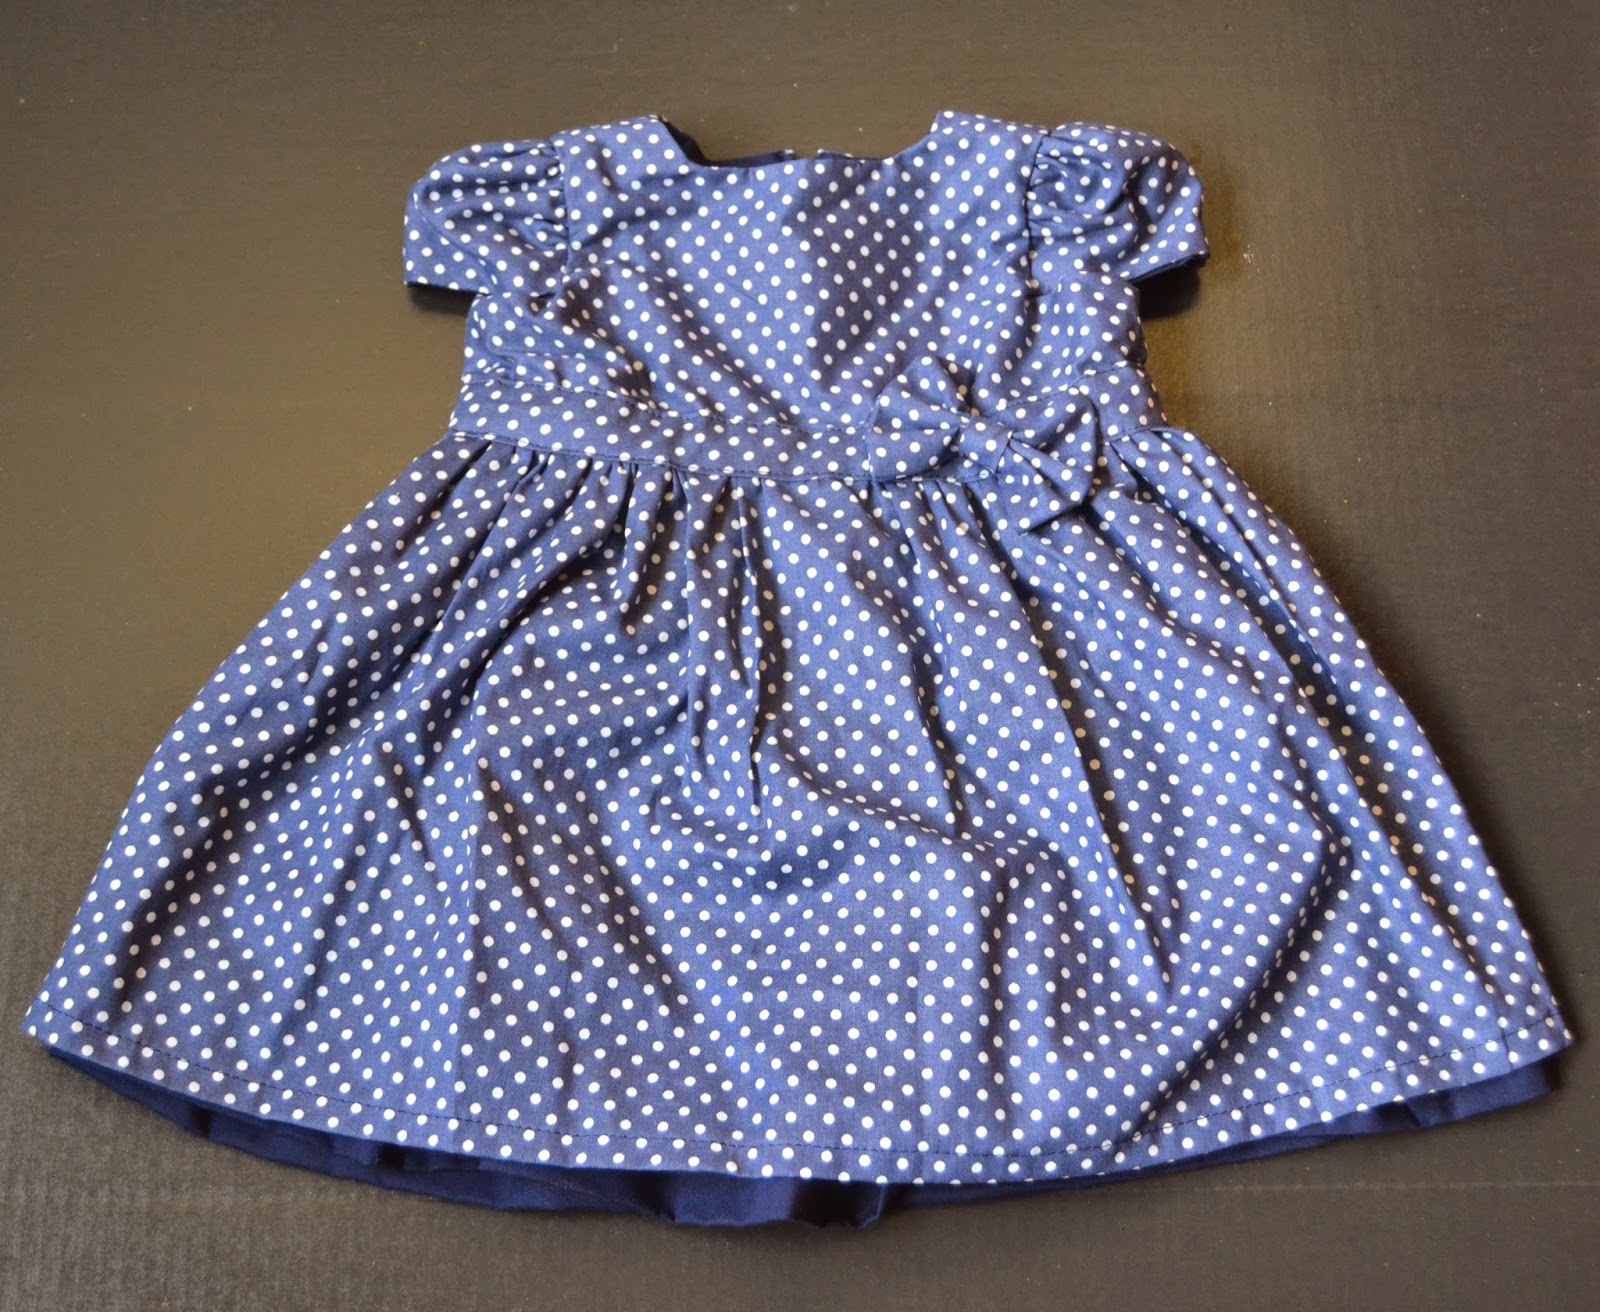 Lucy Lemon handmade baby dresses